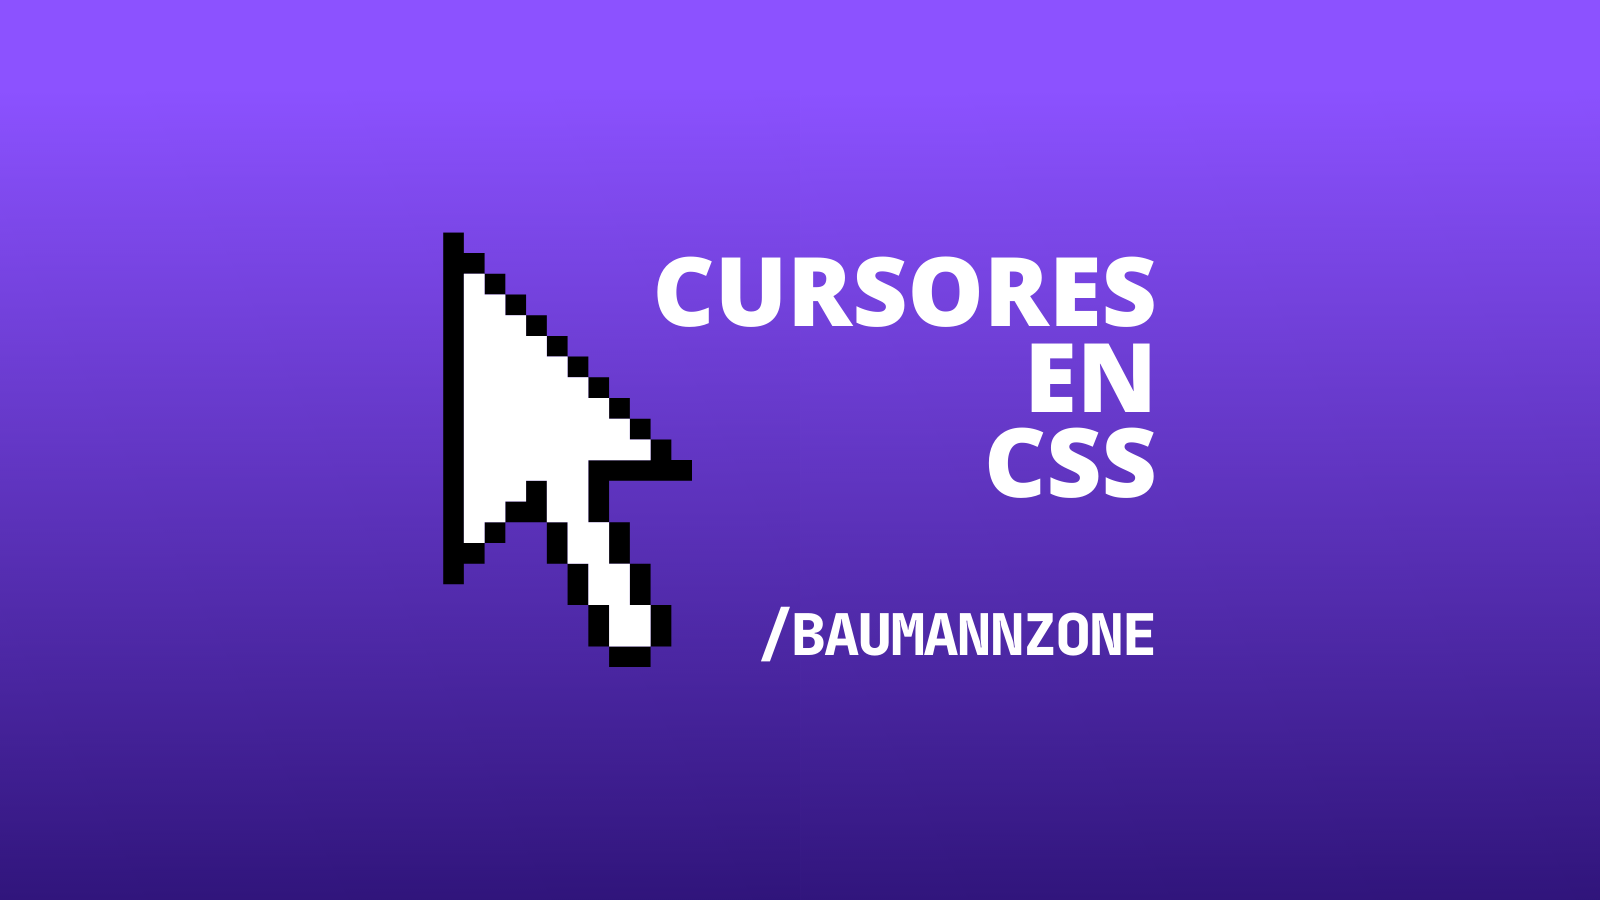 Cursores en CSS por Baumannzone